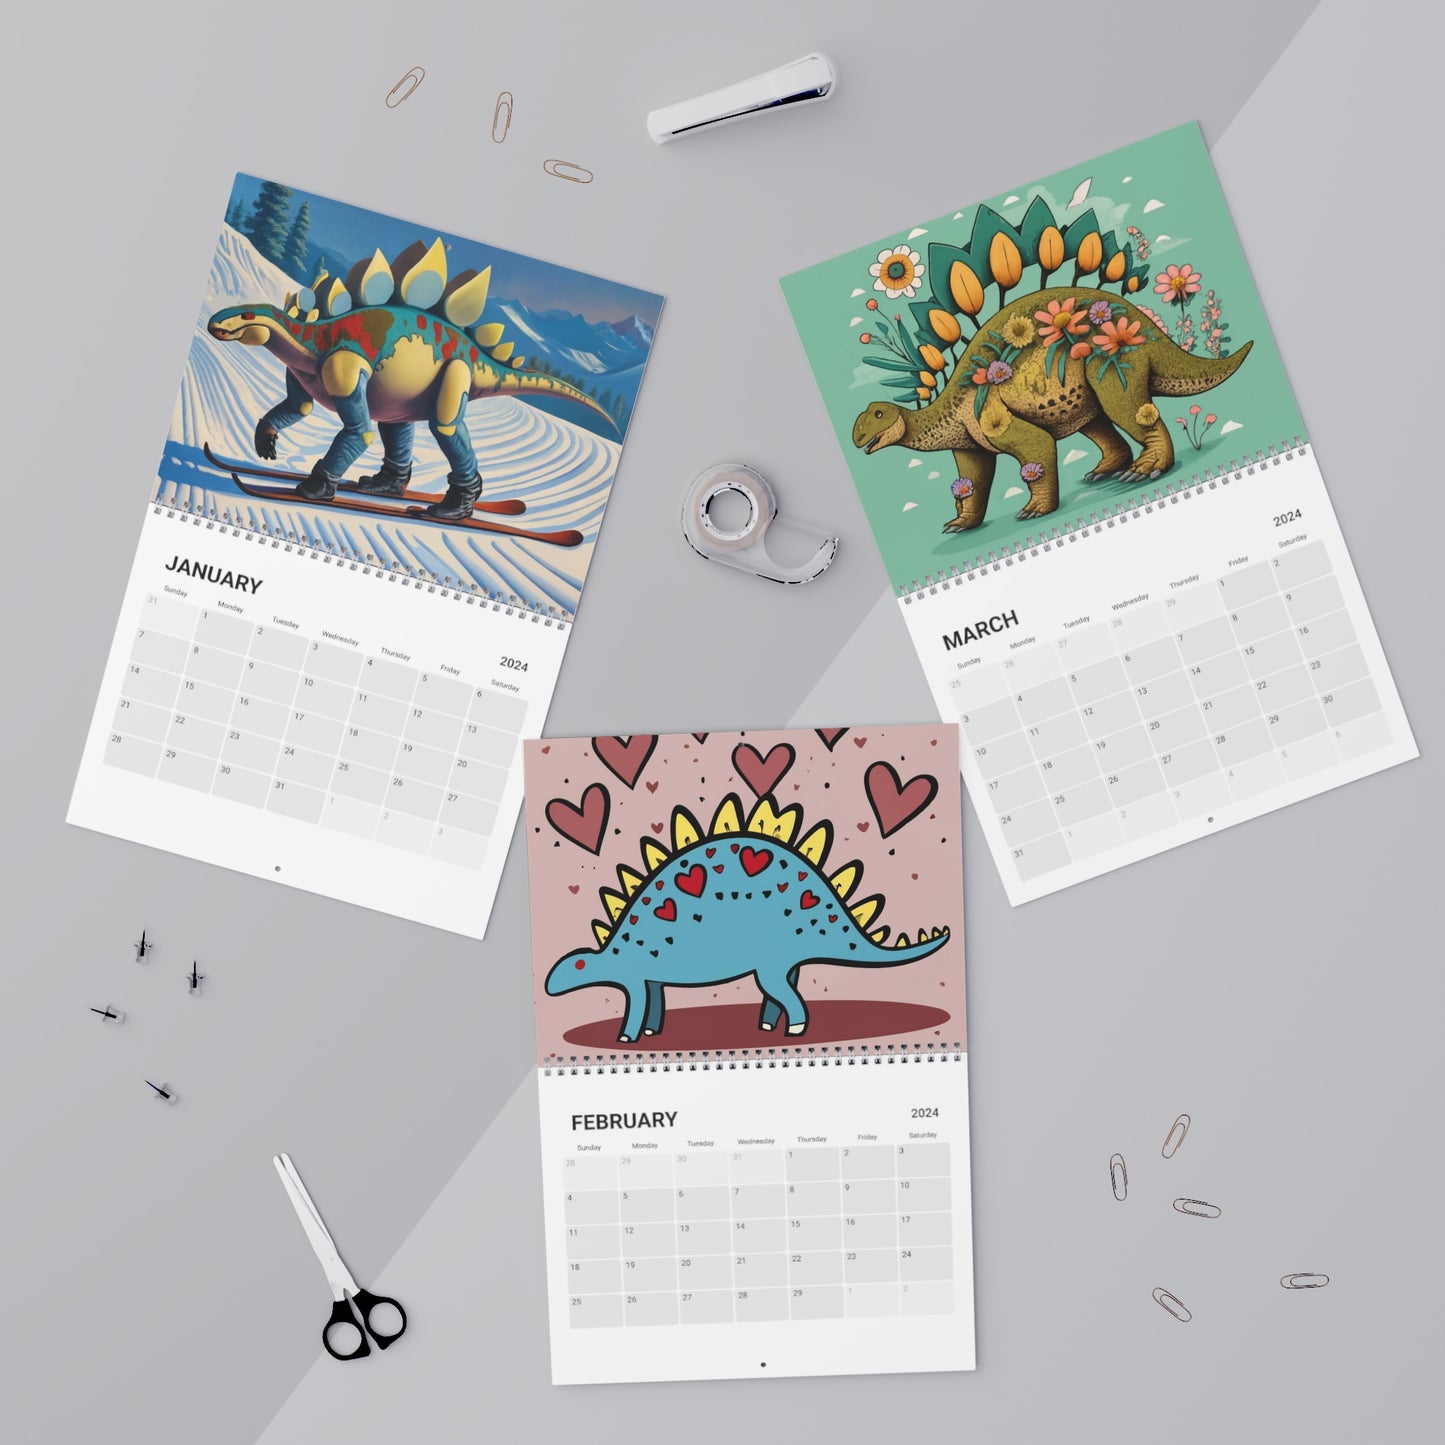 Stegosaurus Wonders: A Year of Prehistoric Charm - 12 Month 2024 Calendar